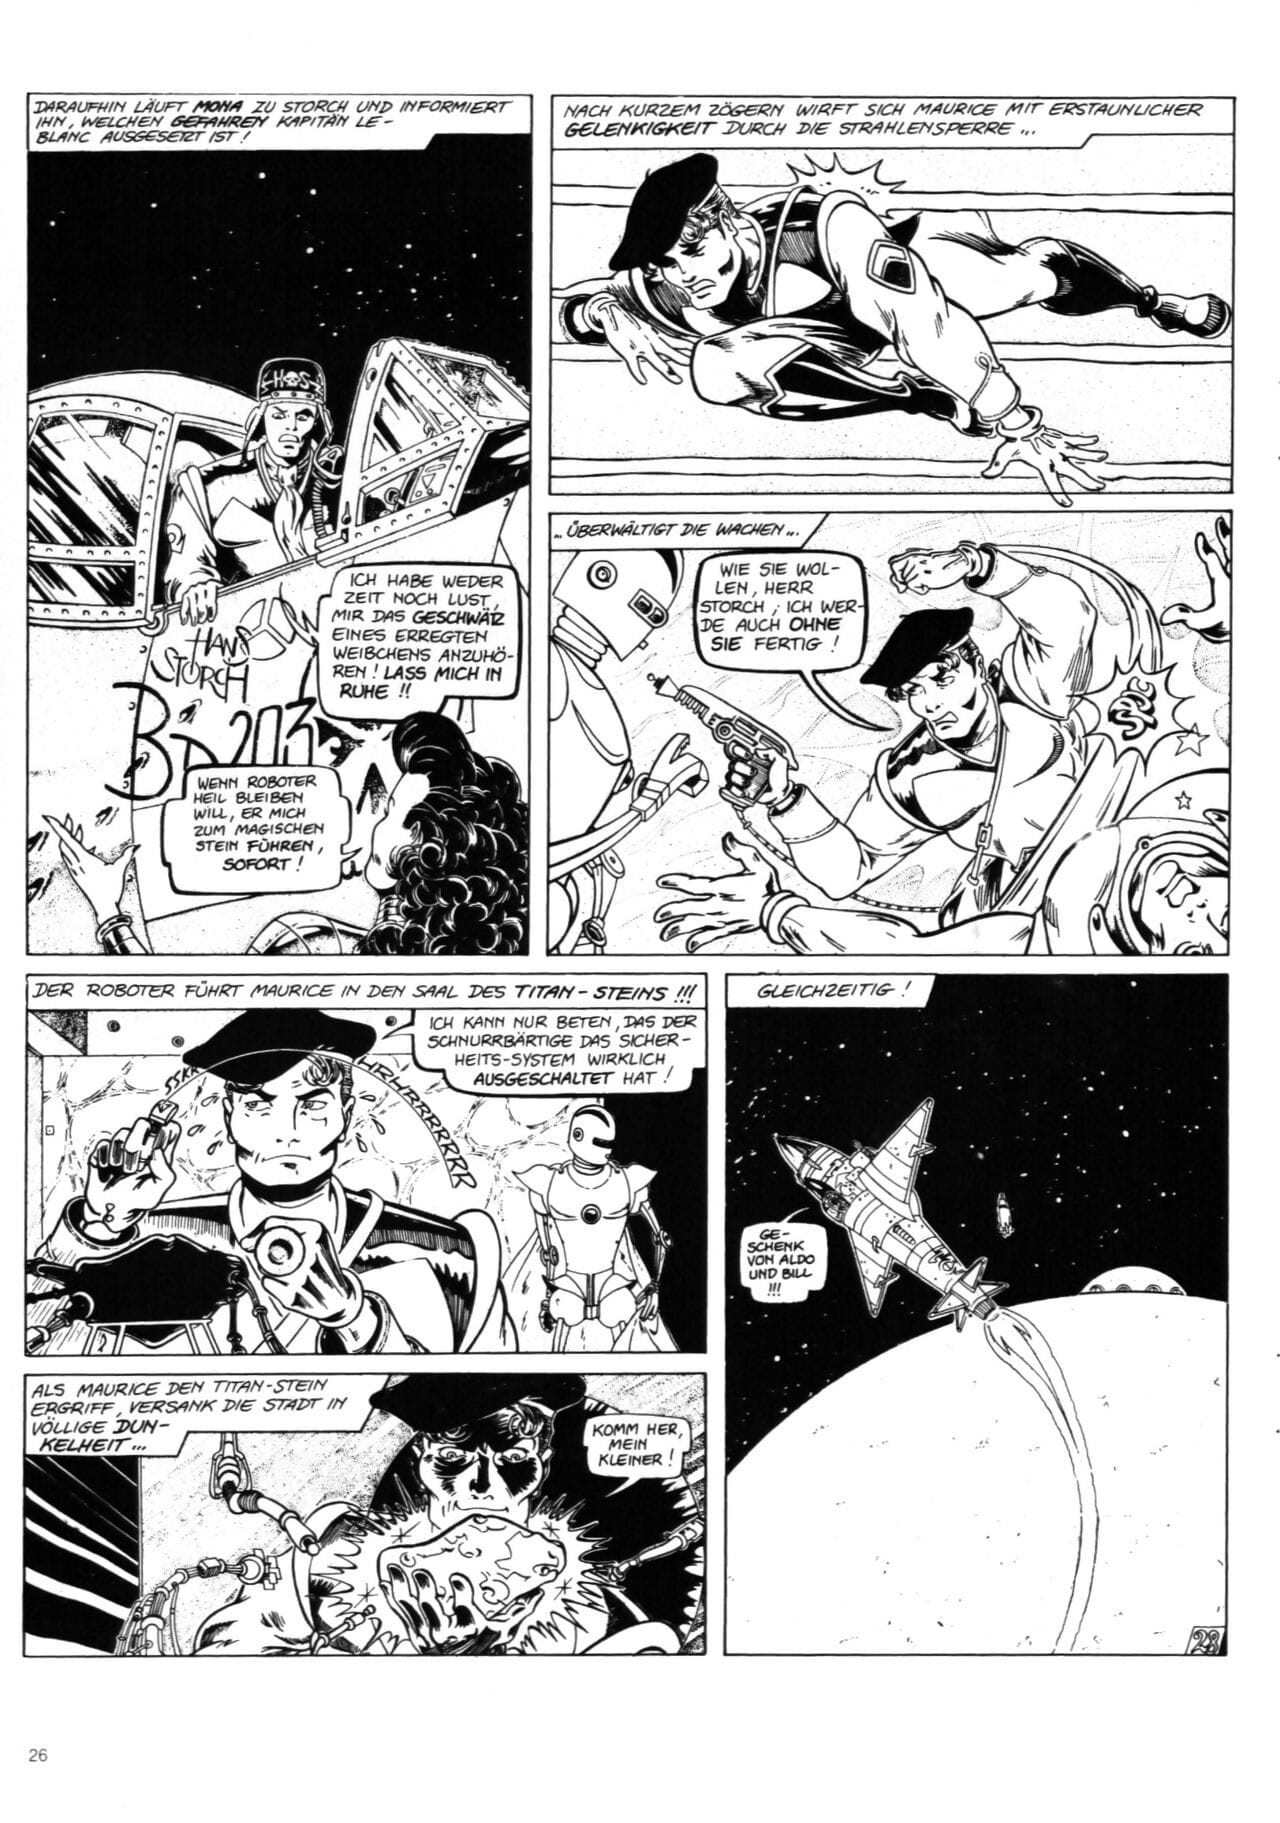 Schwermetall #030 - part 2 page 1